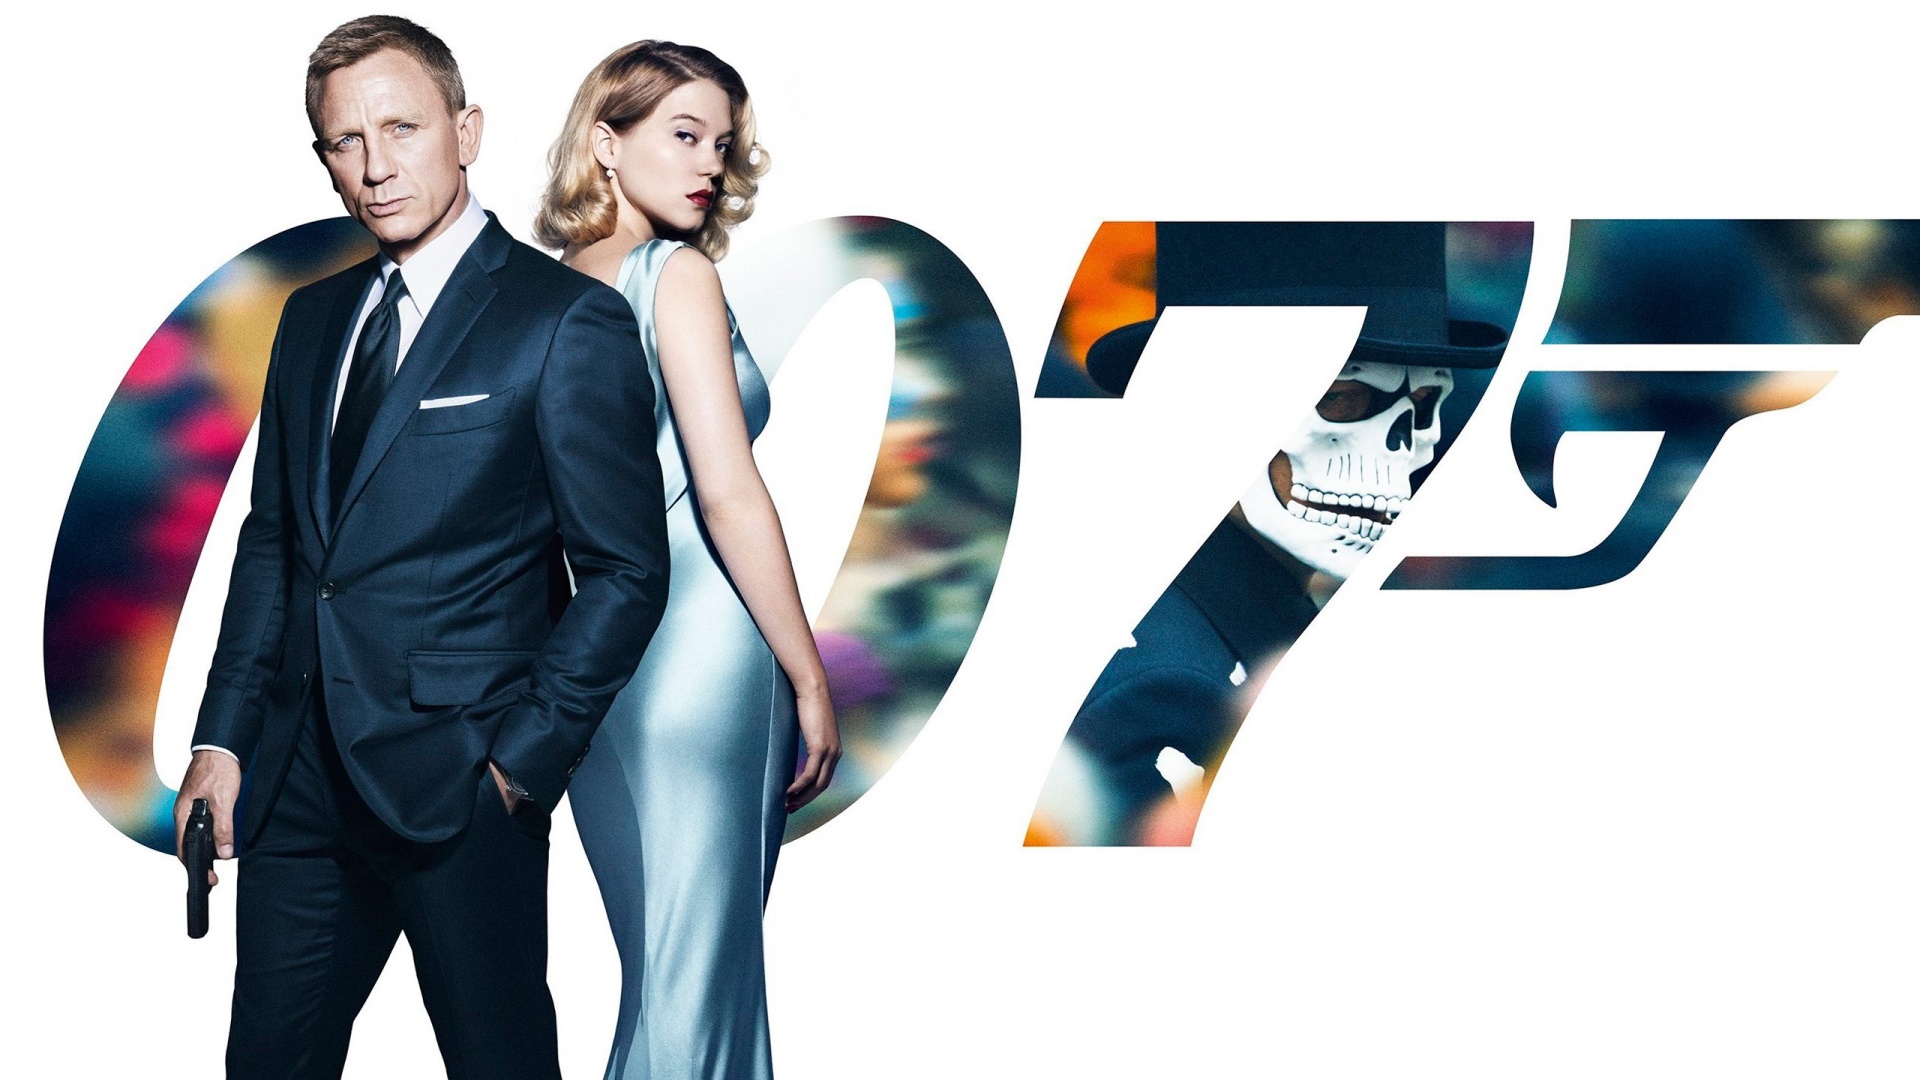 James Bond Film Spectre Movie Backgrounds